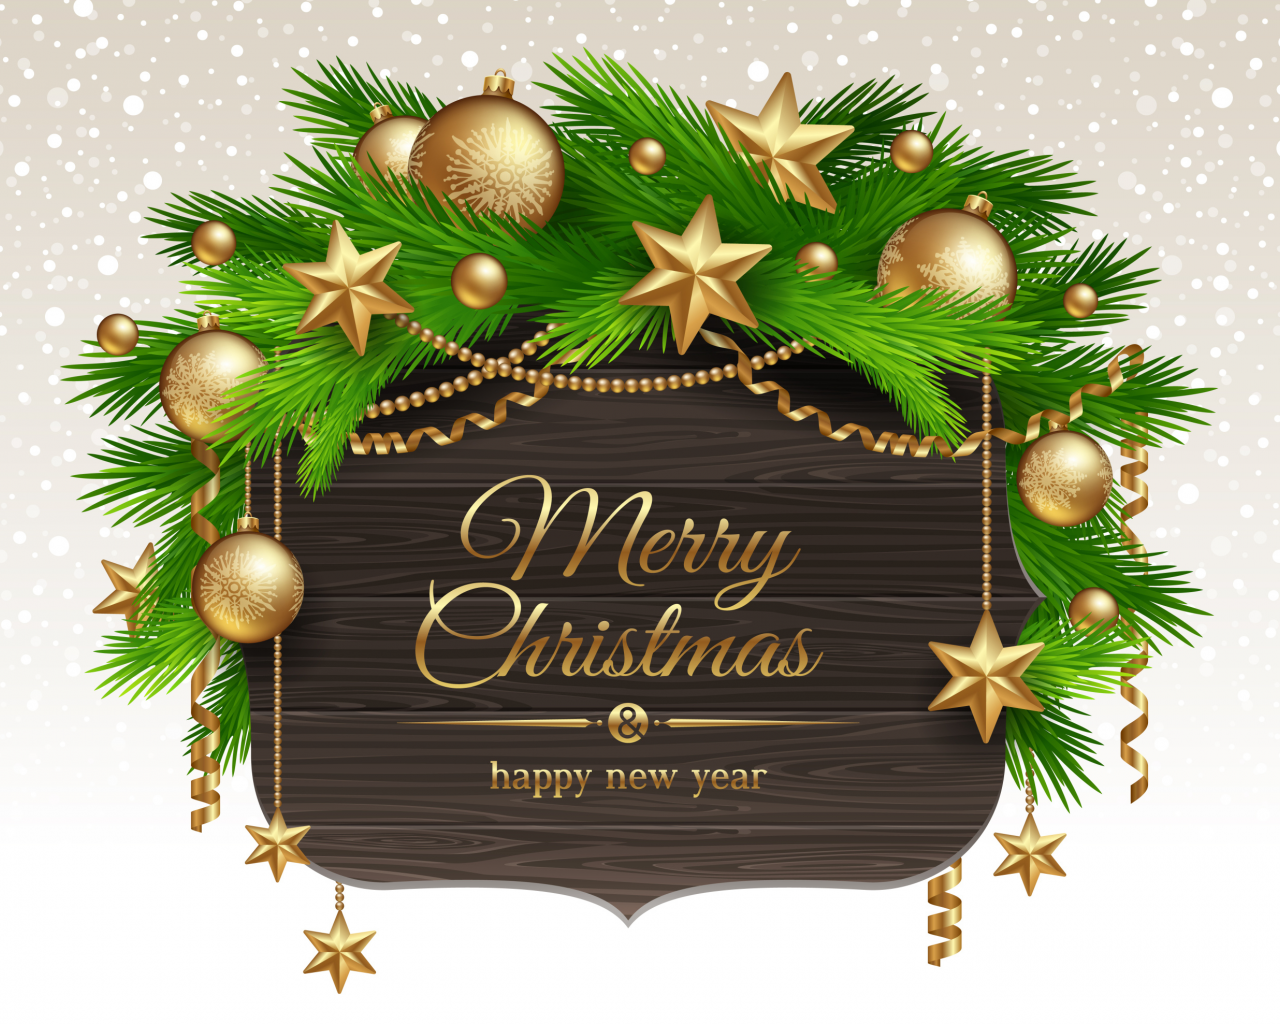 праздник, holiday, merry christmas, balls, шары, decoration, happy new year, stars